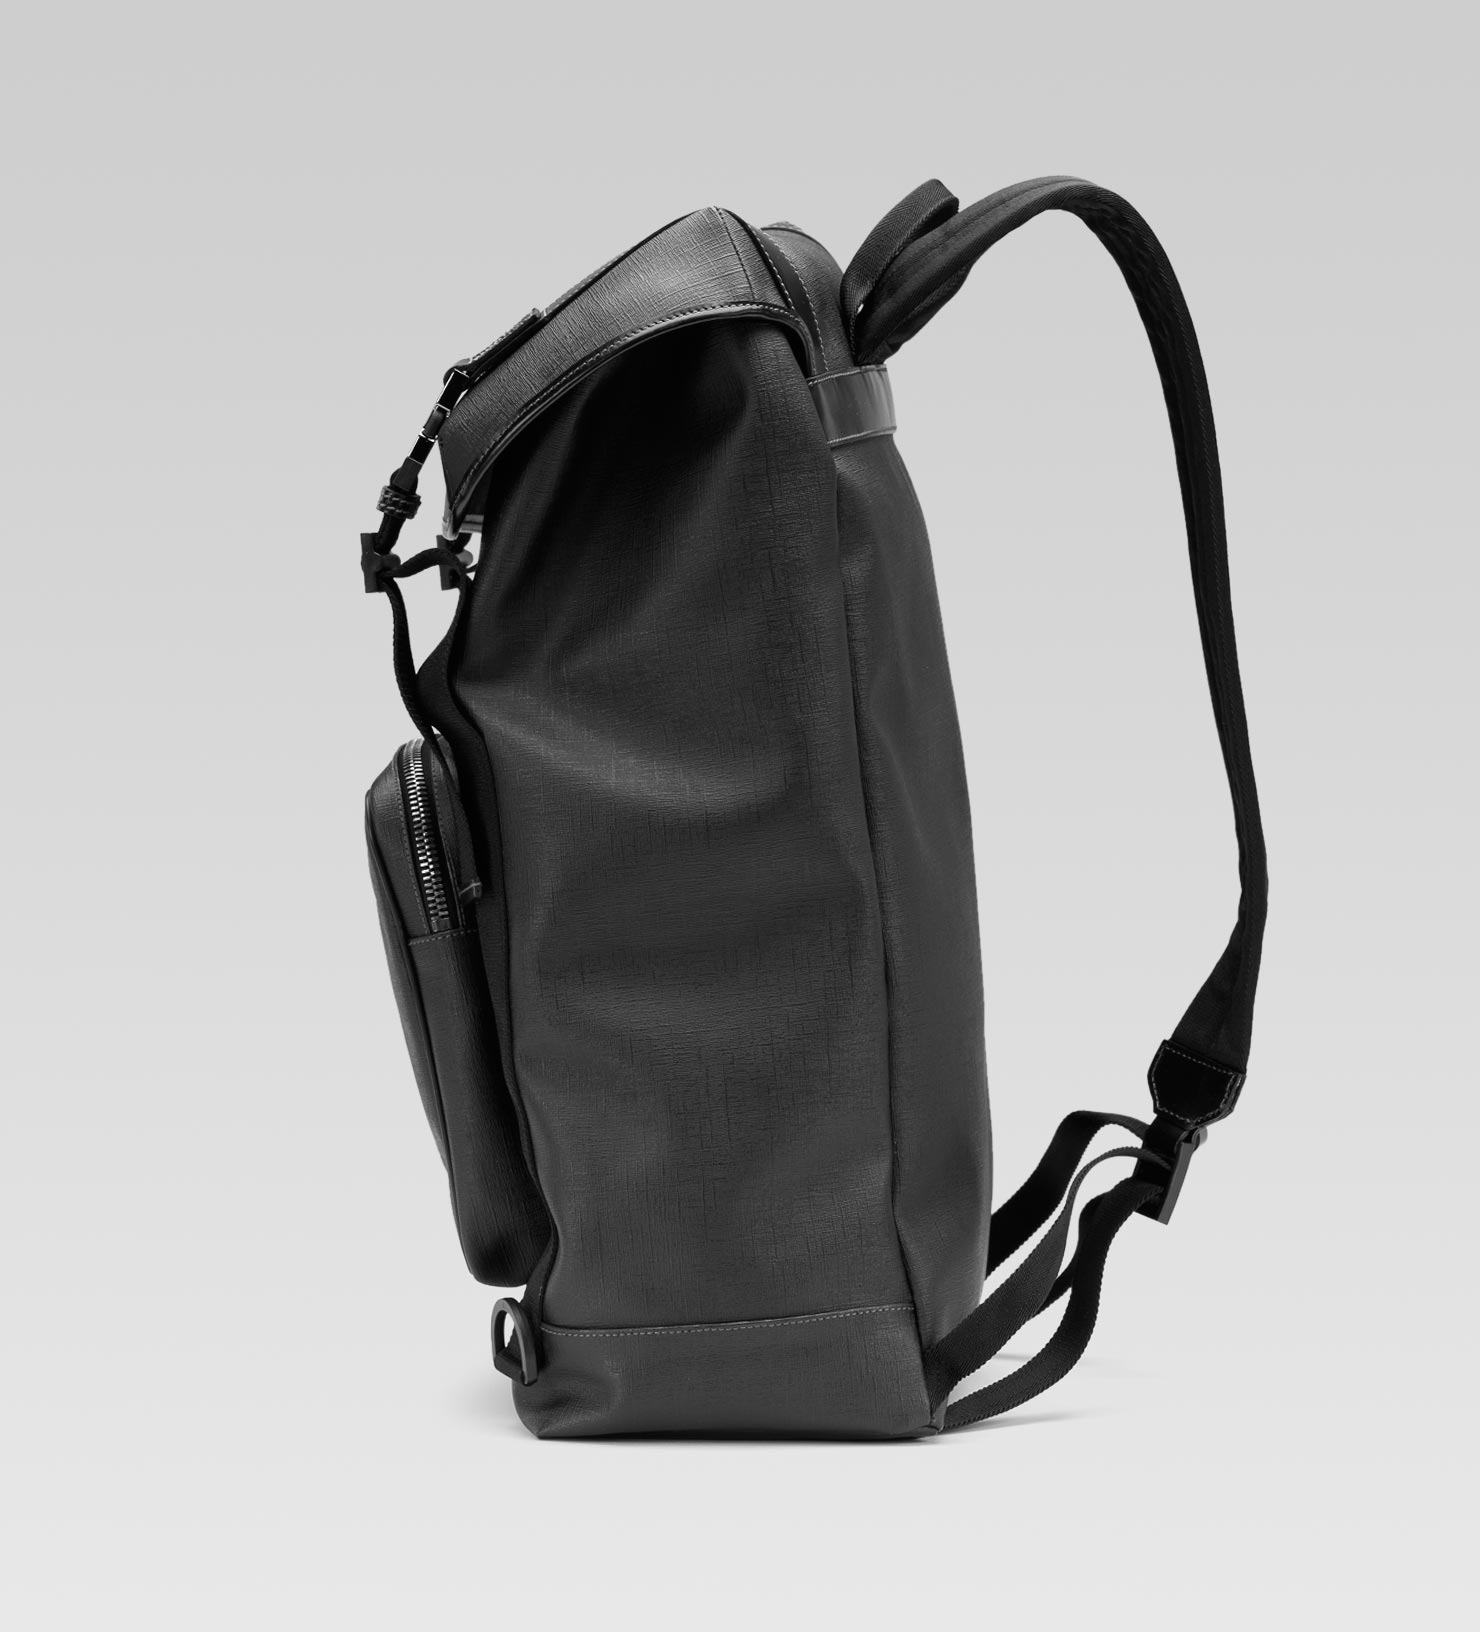 Lyst - Gucci Gg Supreme Canvas Interlocking G Backpack in Black for Men